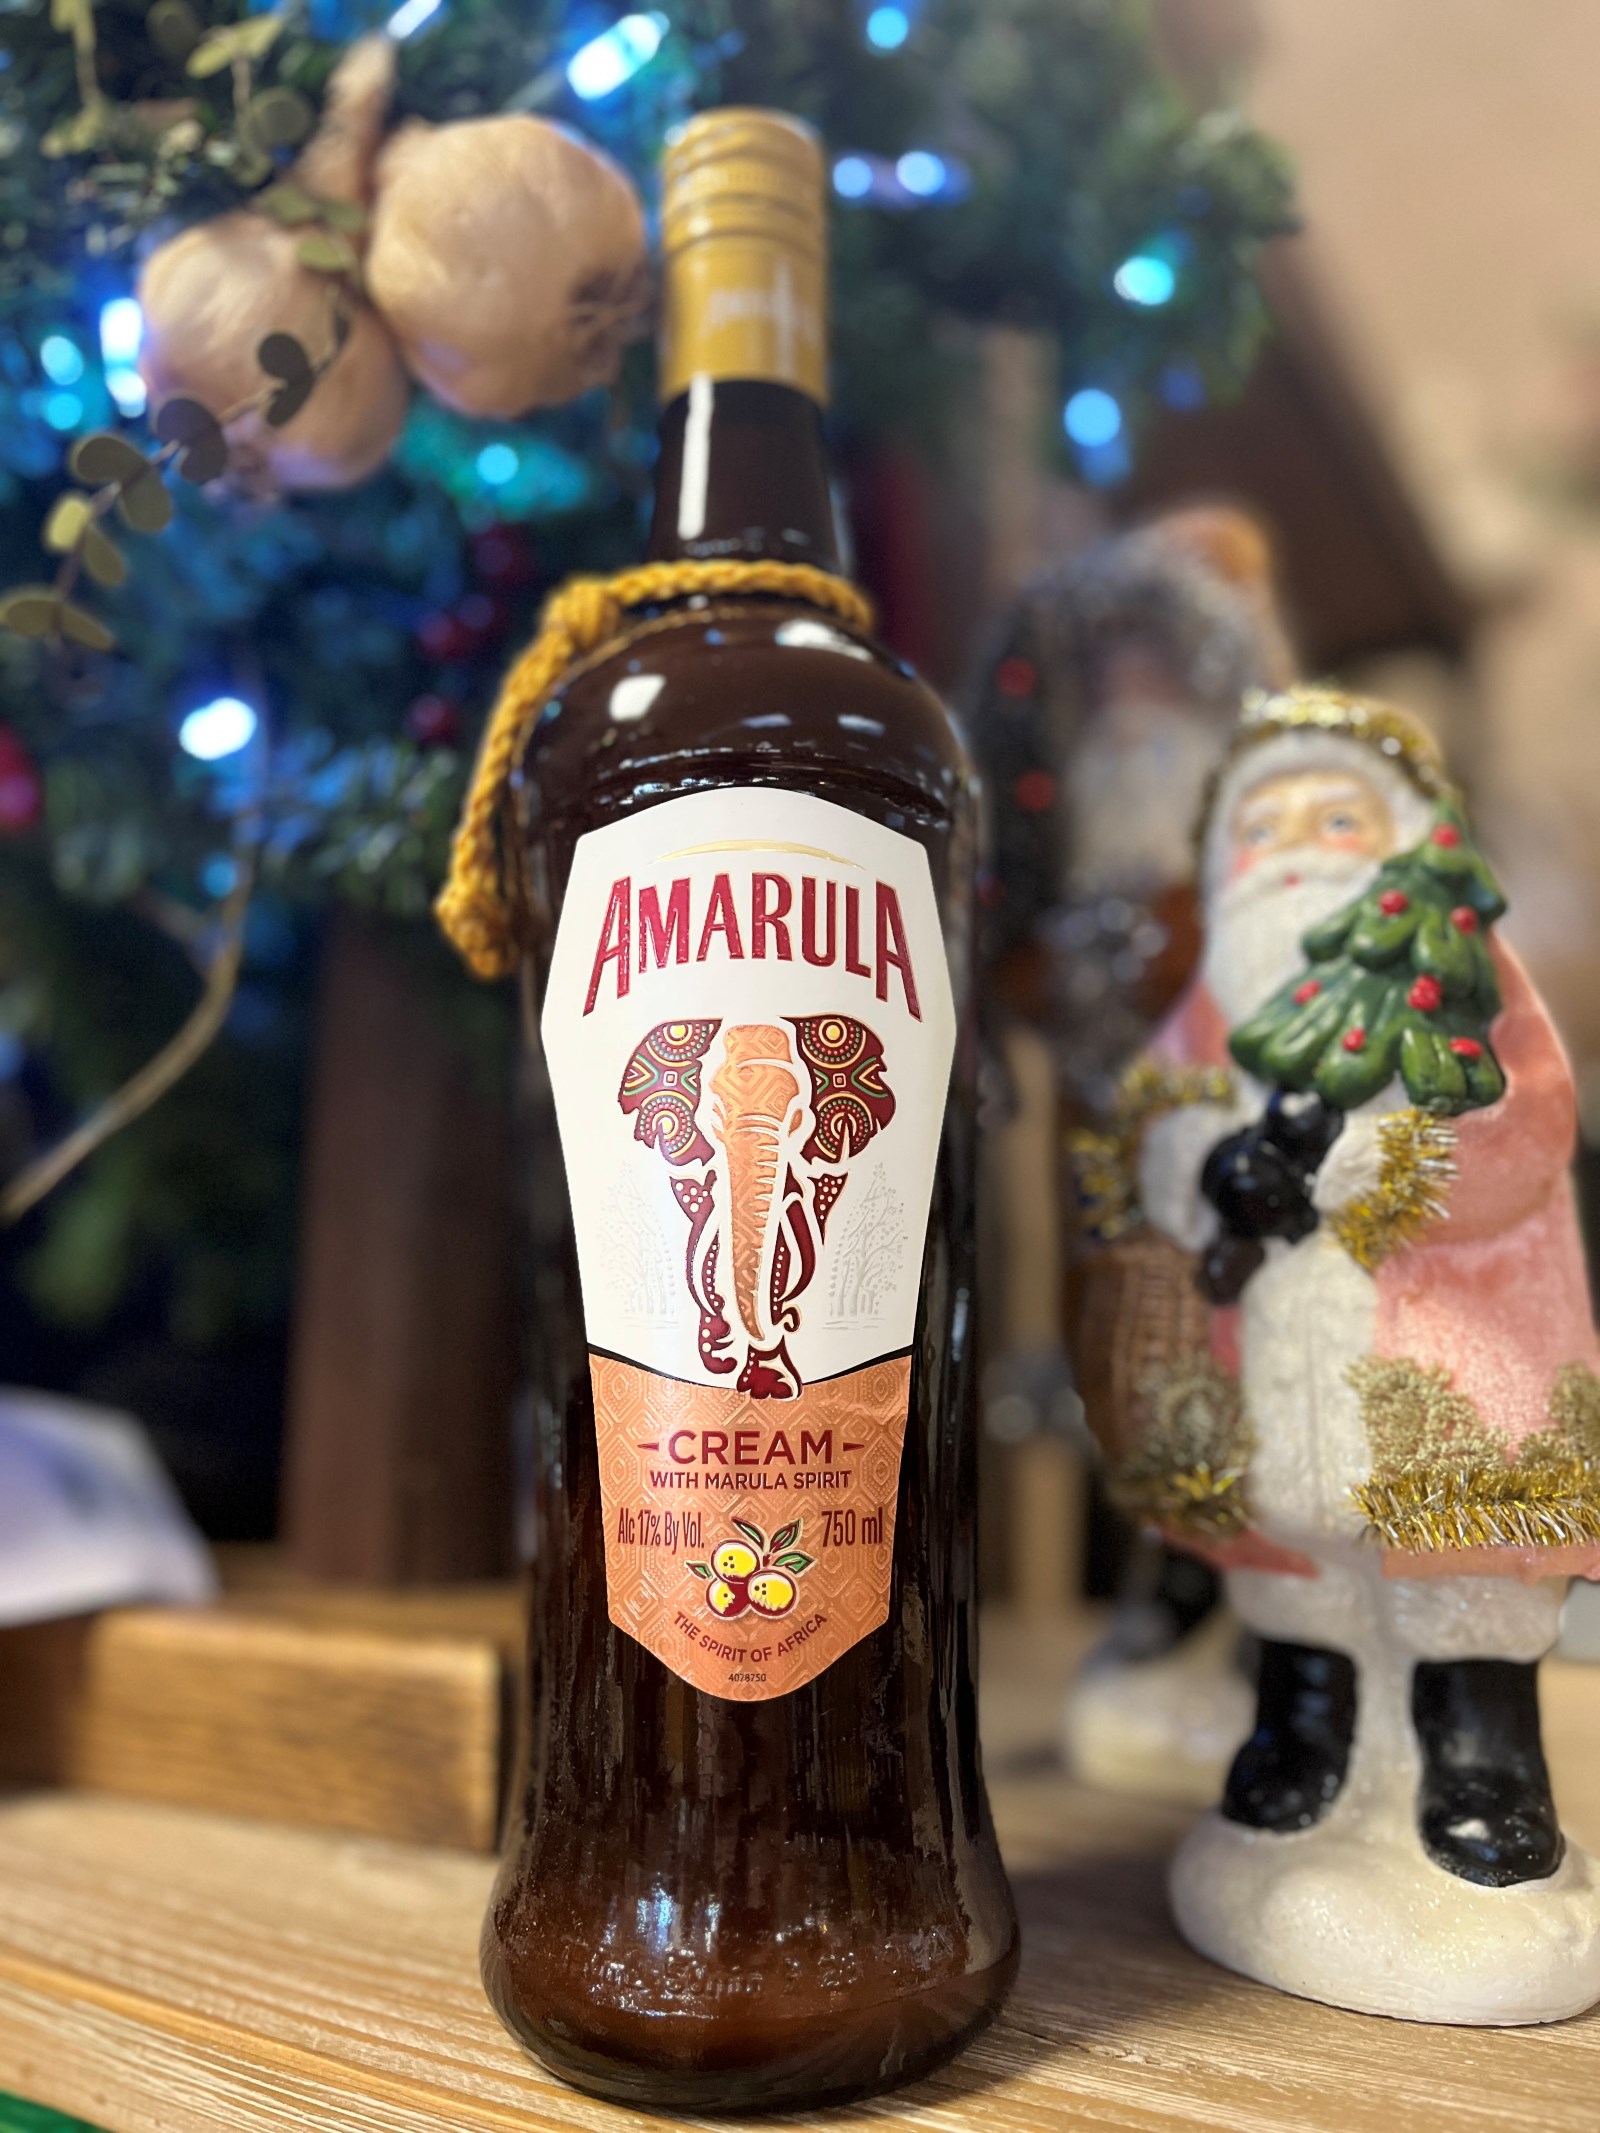 A bottle of Amarula liqueur sits on a table next to a Santa Claus figurine